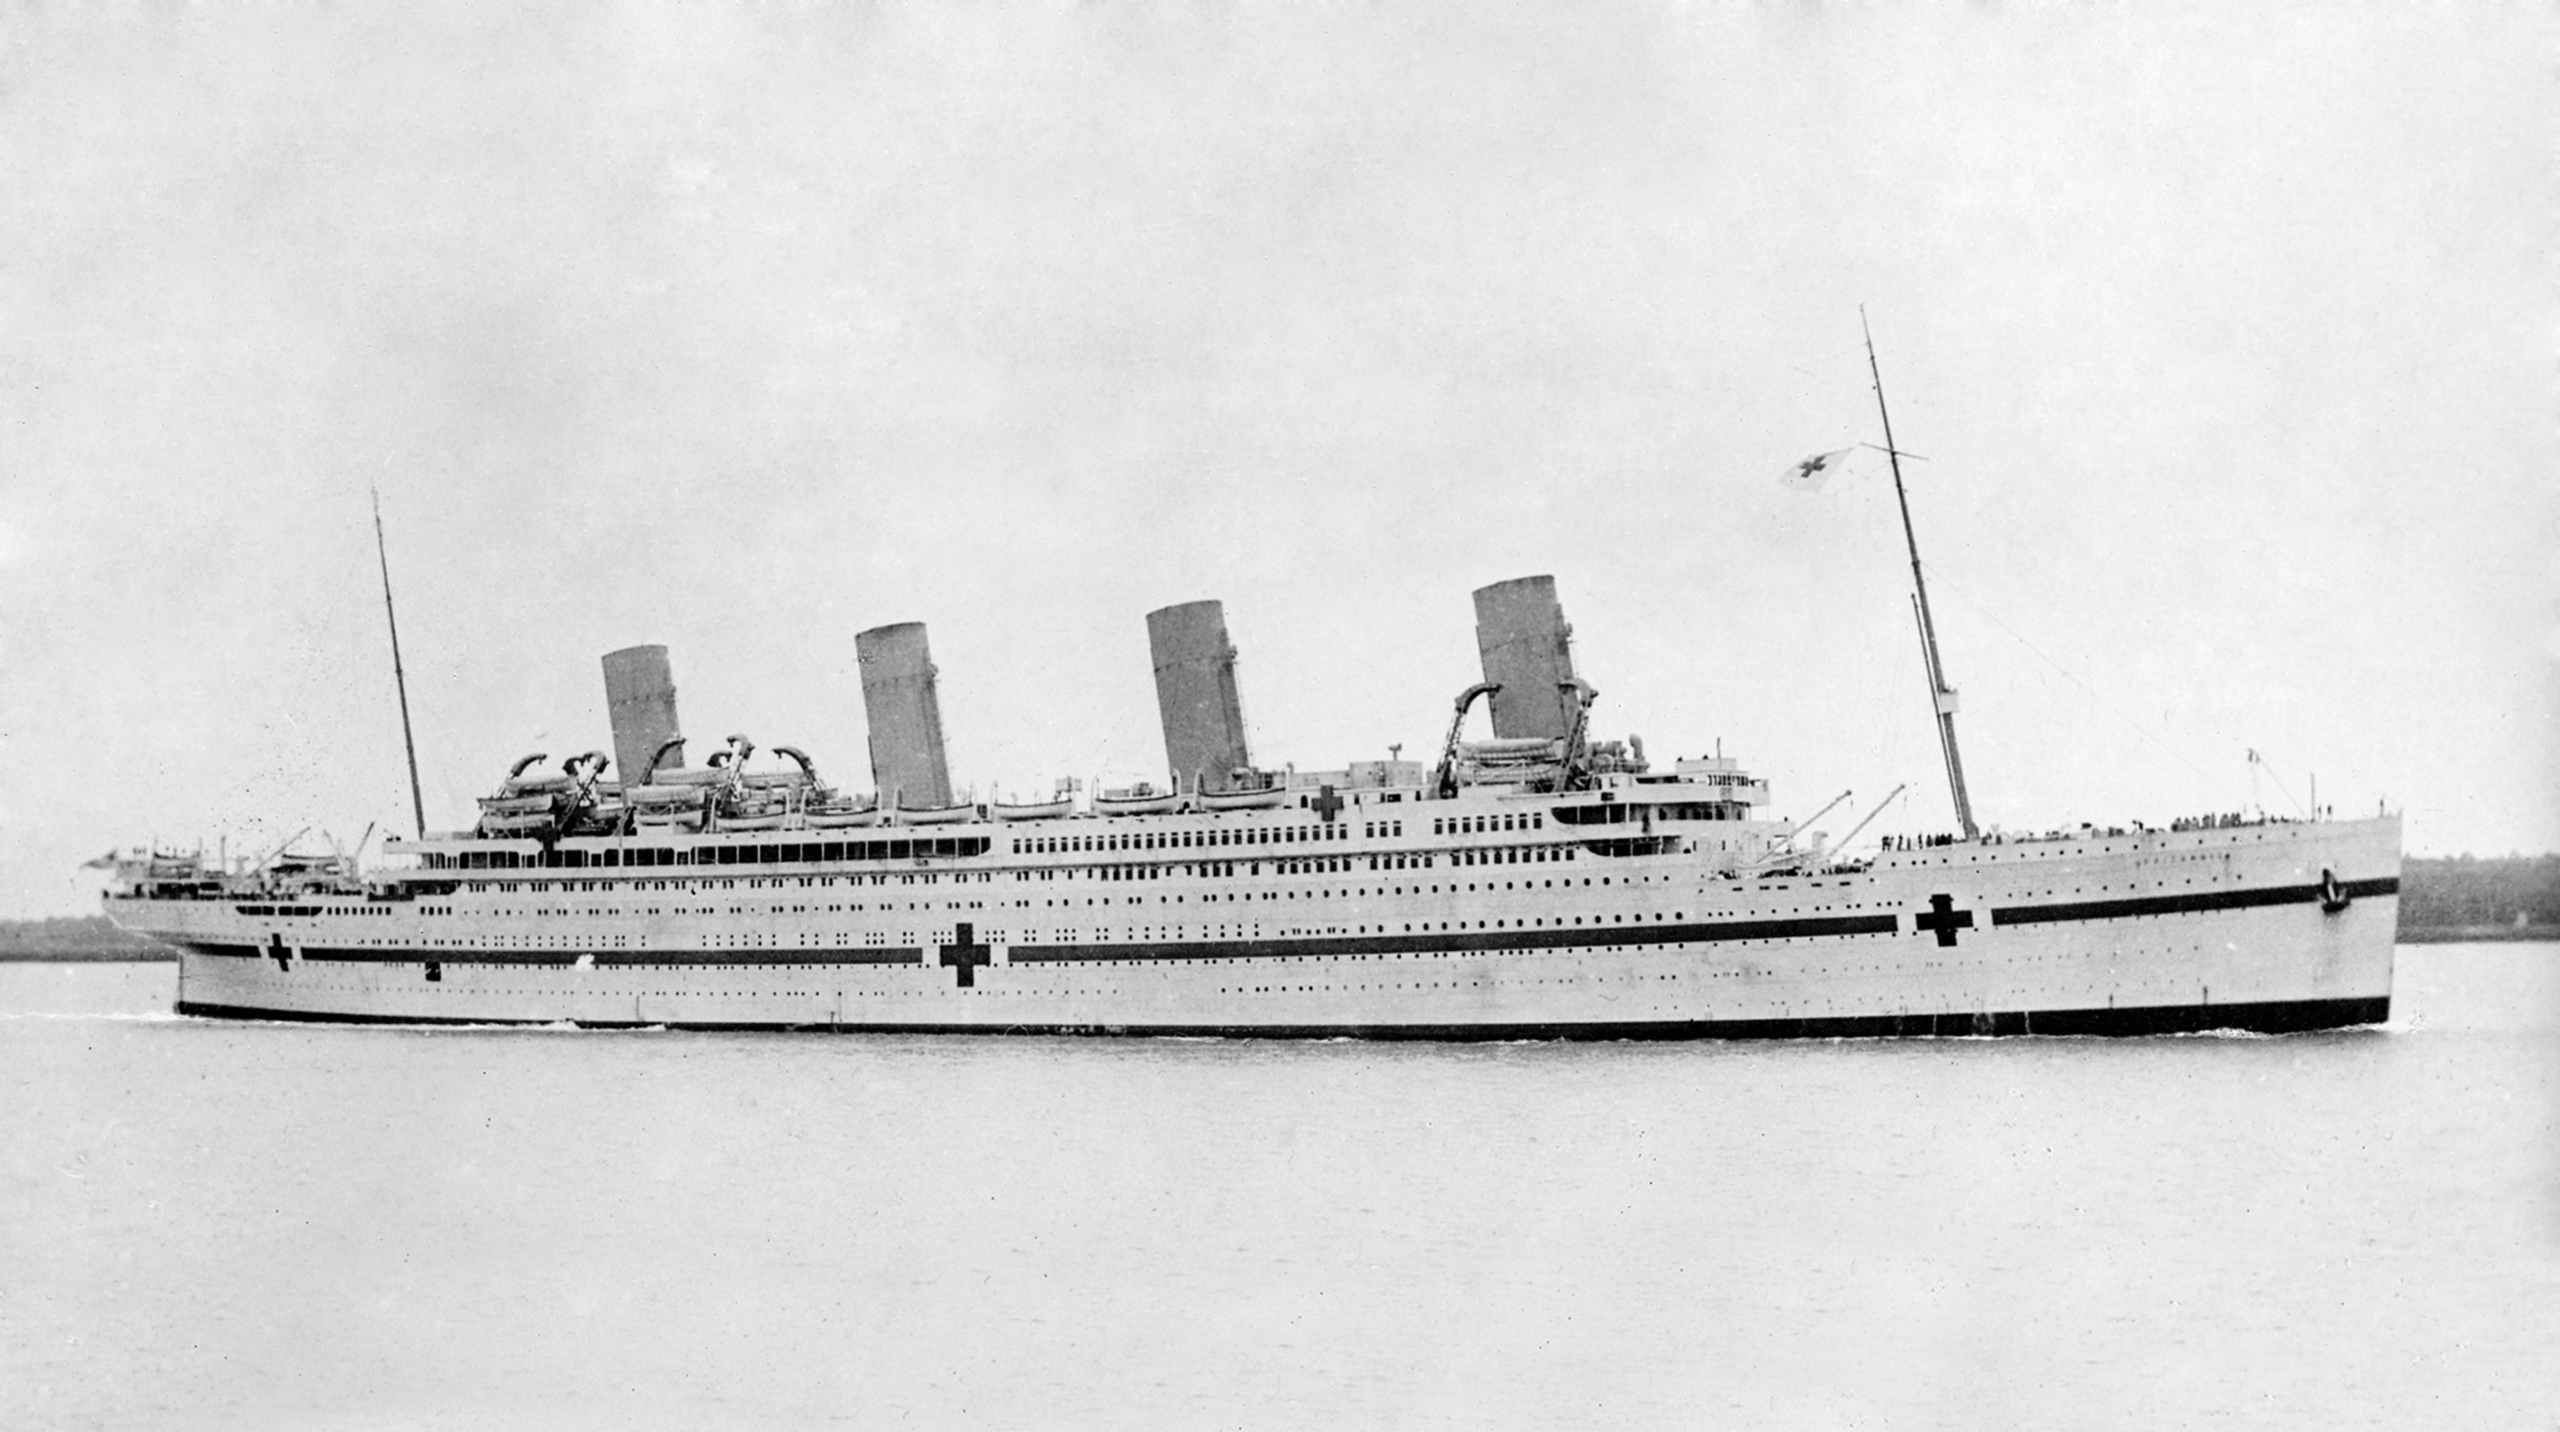 "Miss uppumatu" Violet Jessop – Titanicu, Olympicu ja Britannici laevavrakkide 2 ellujääja